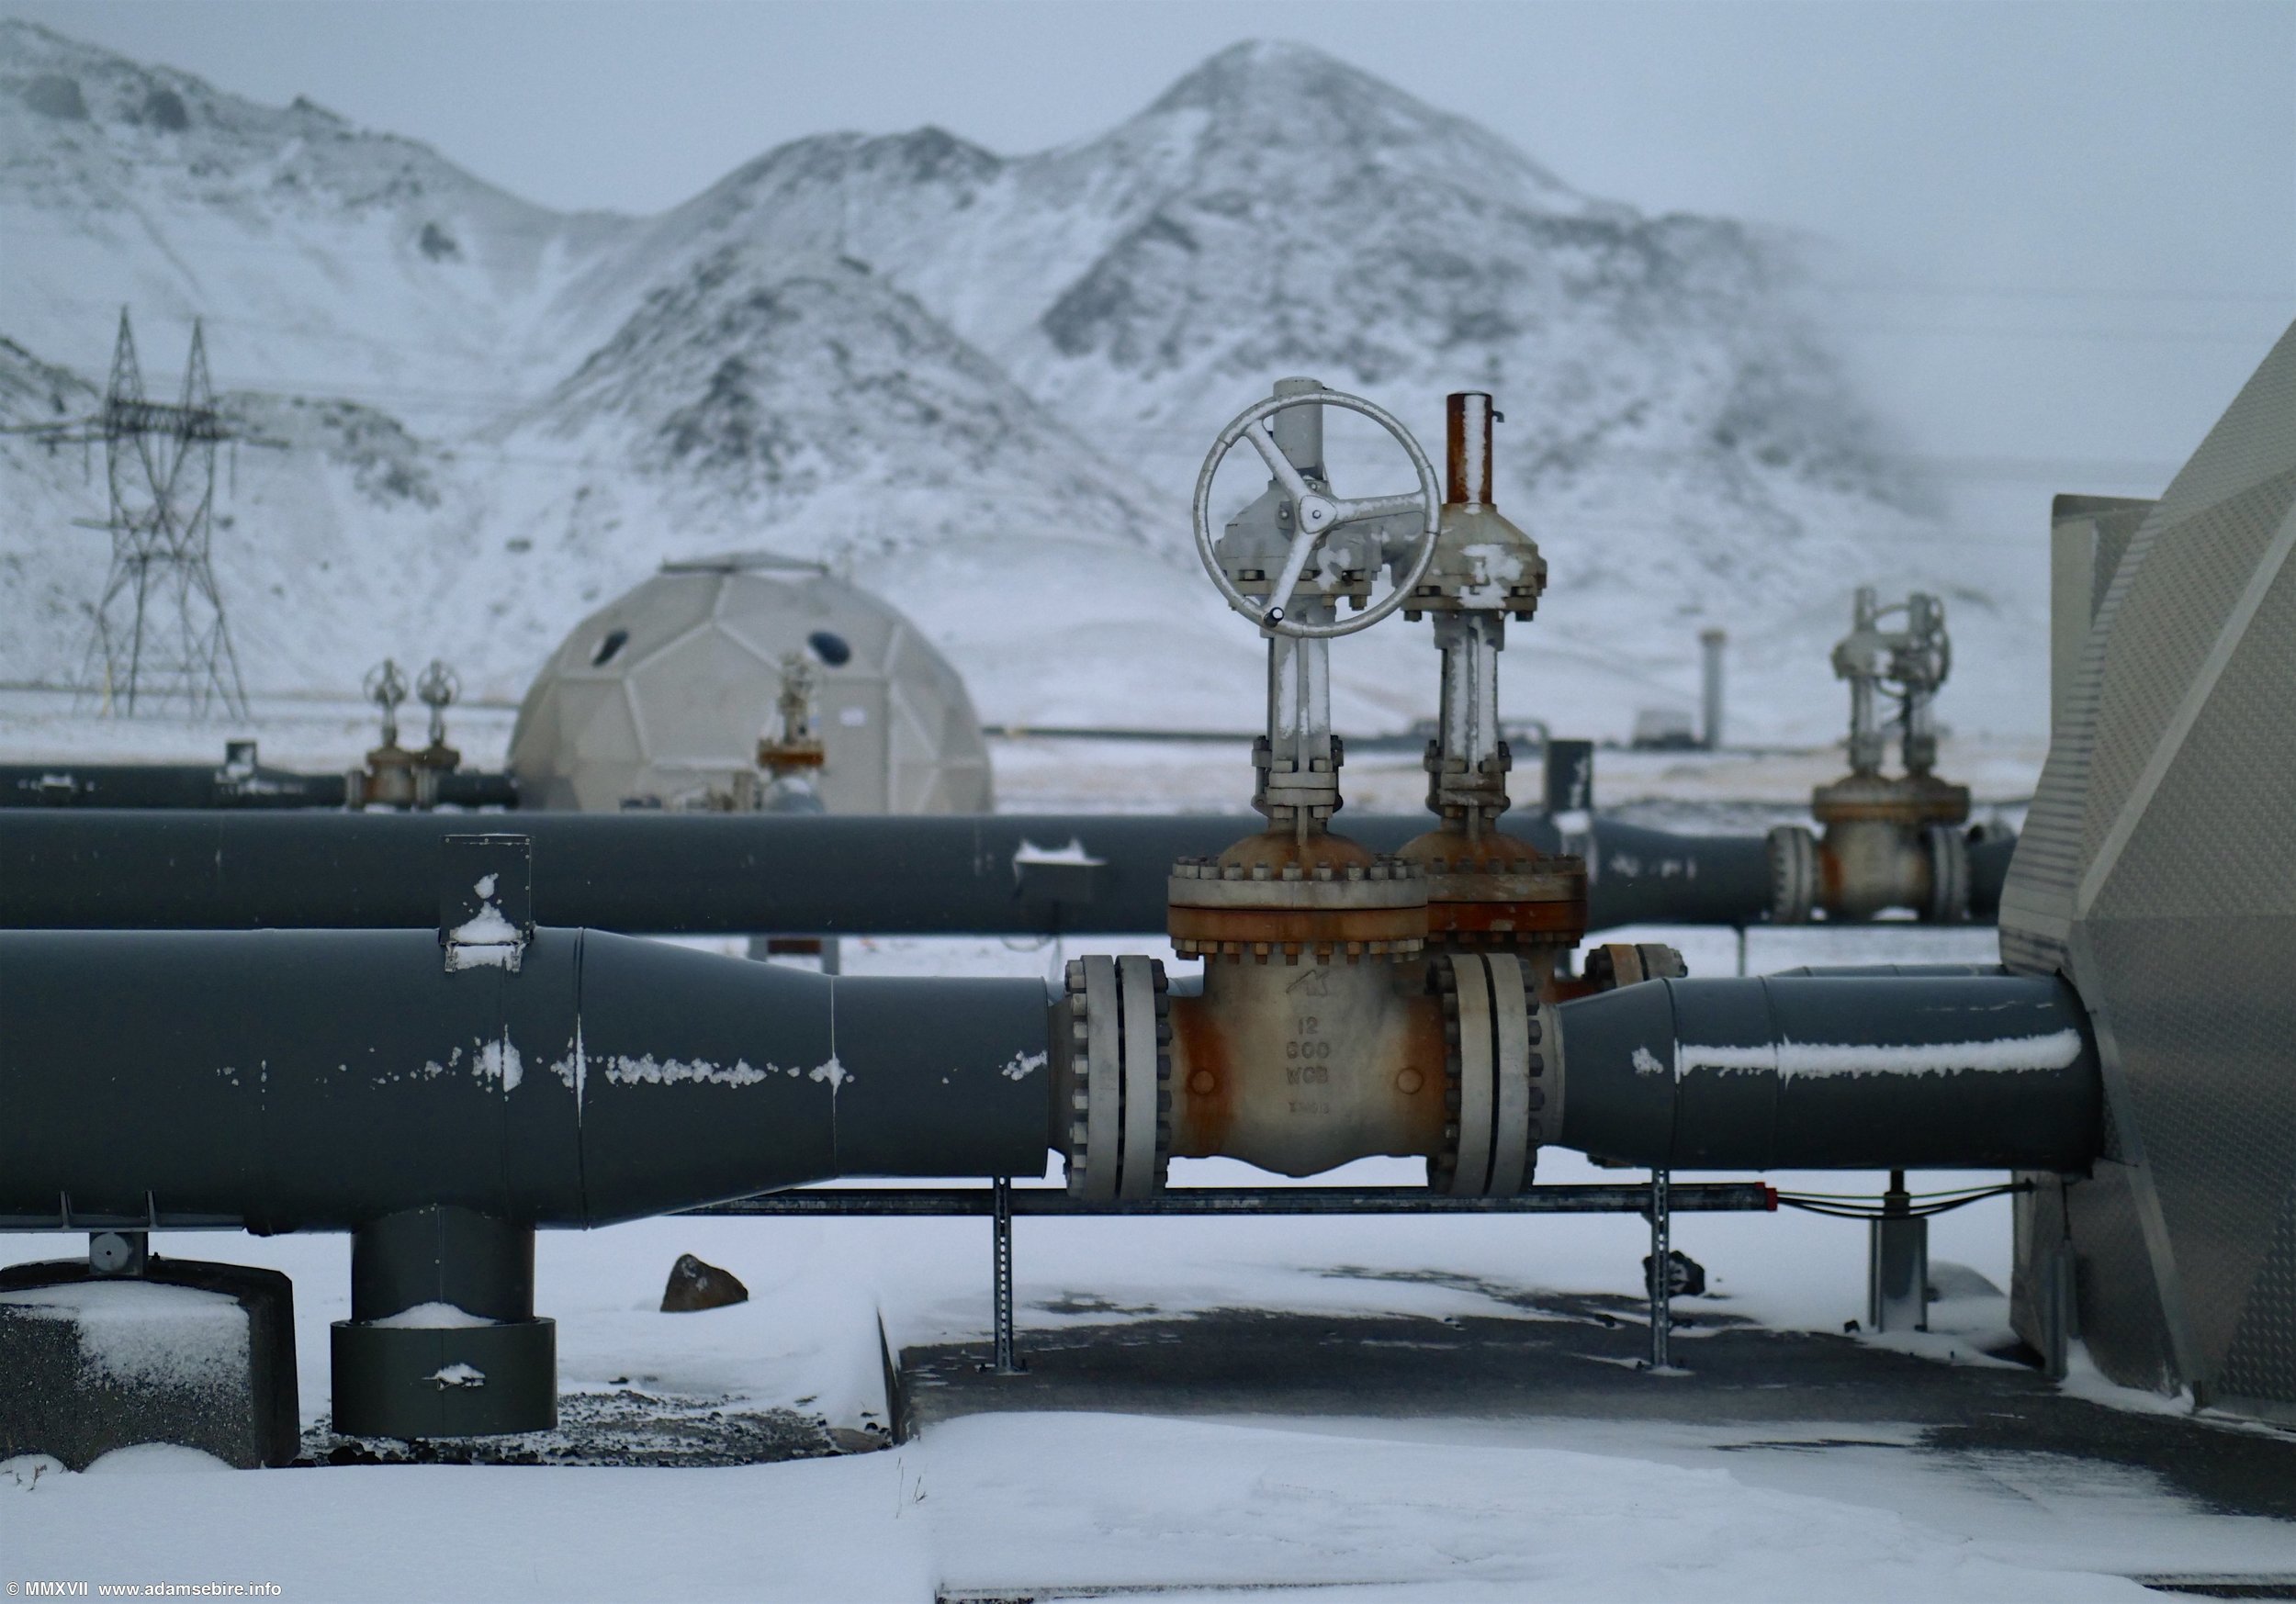 Carbon injection wells, Climeworks / CarbFix2 Hellisheiði site, Iceland